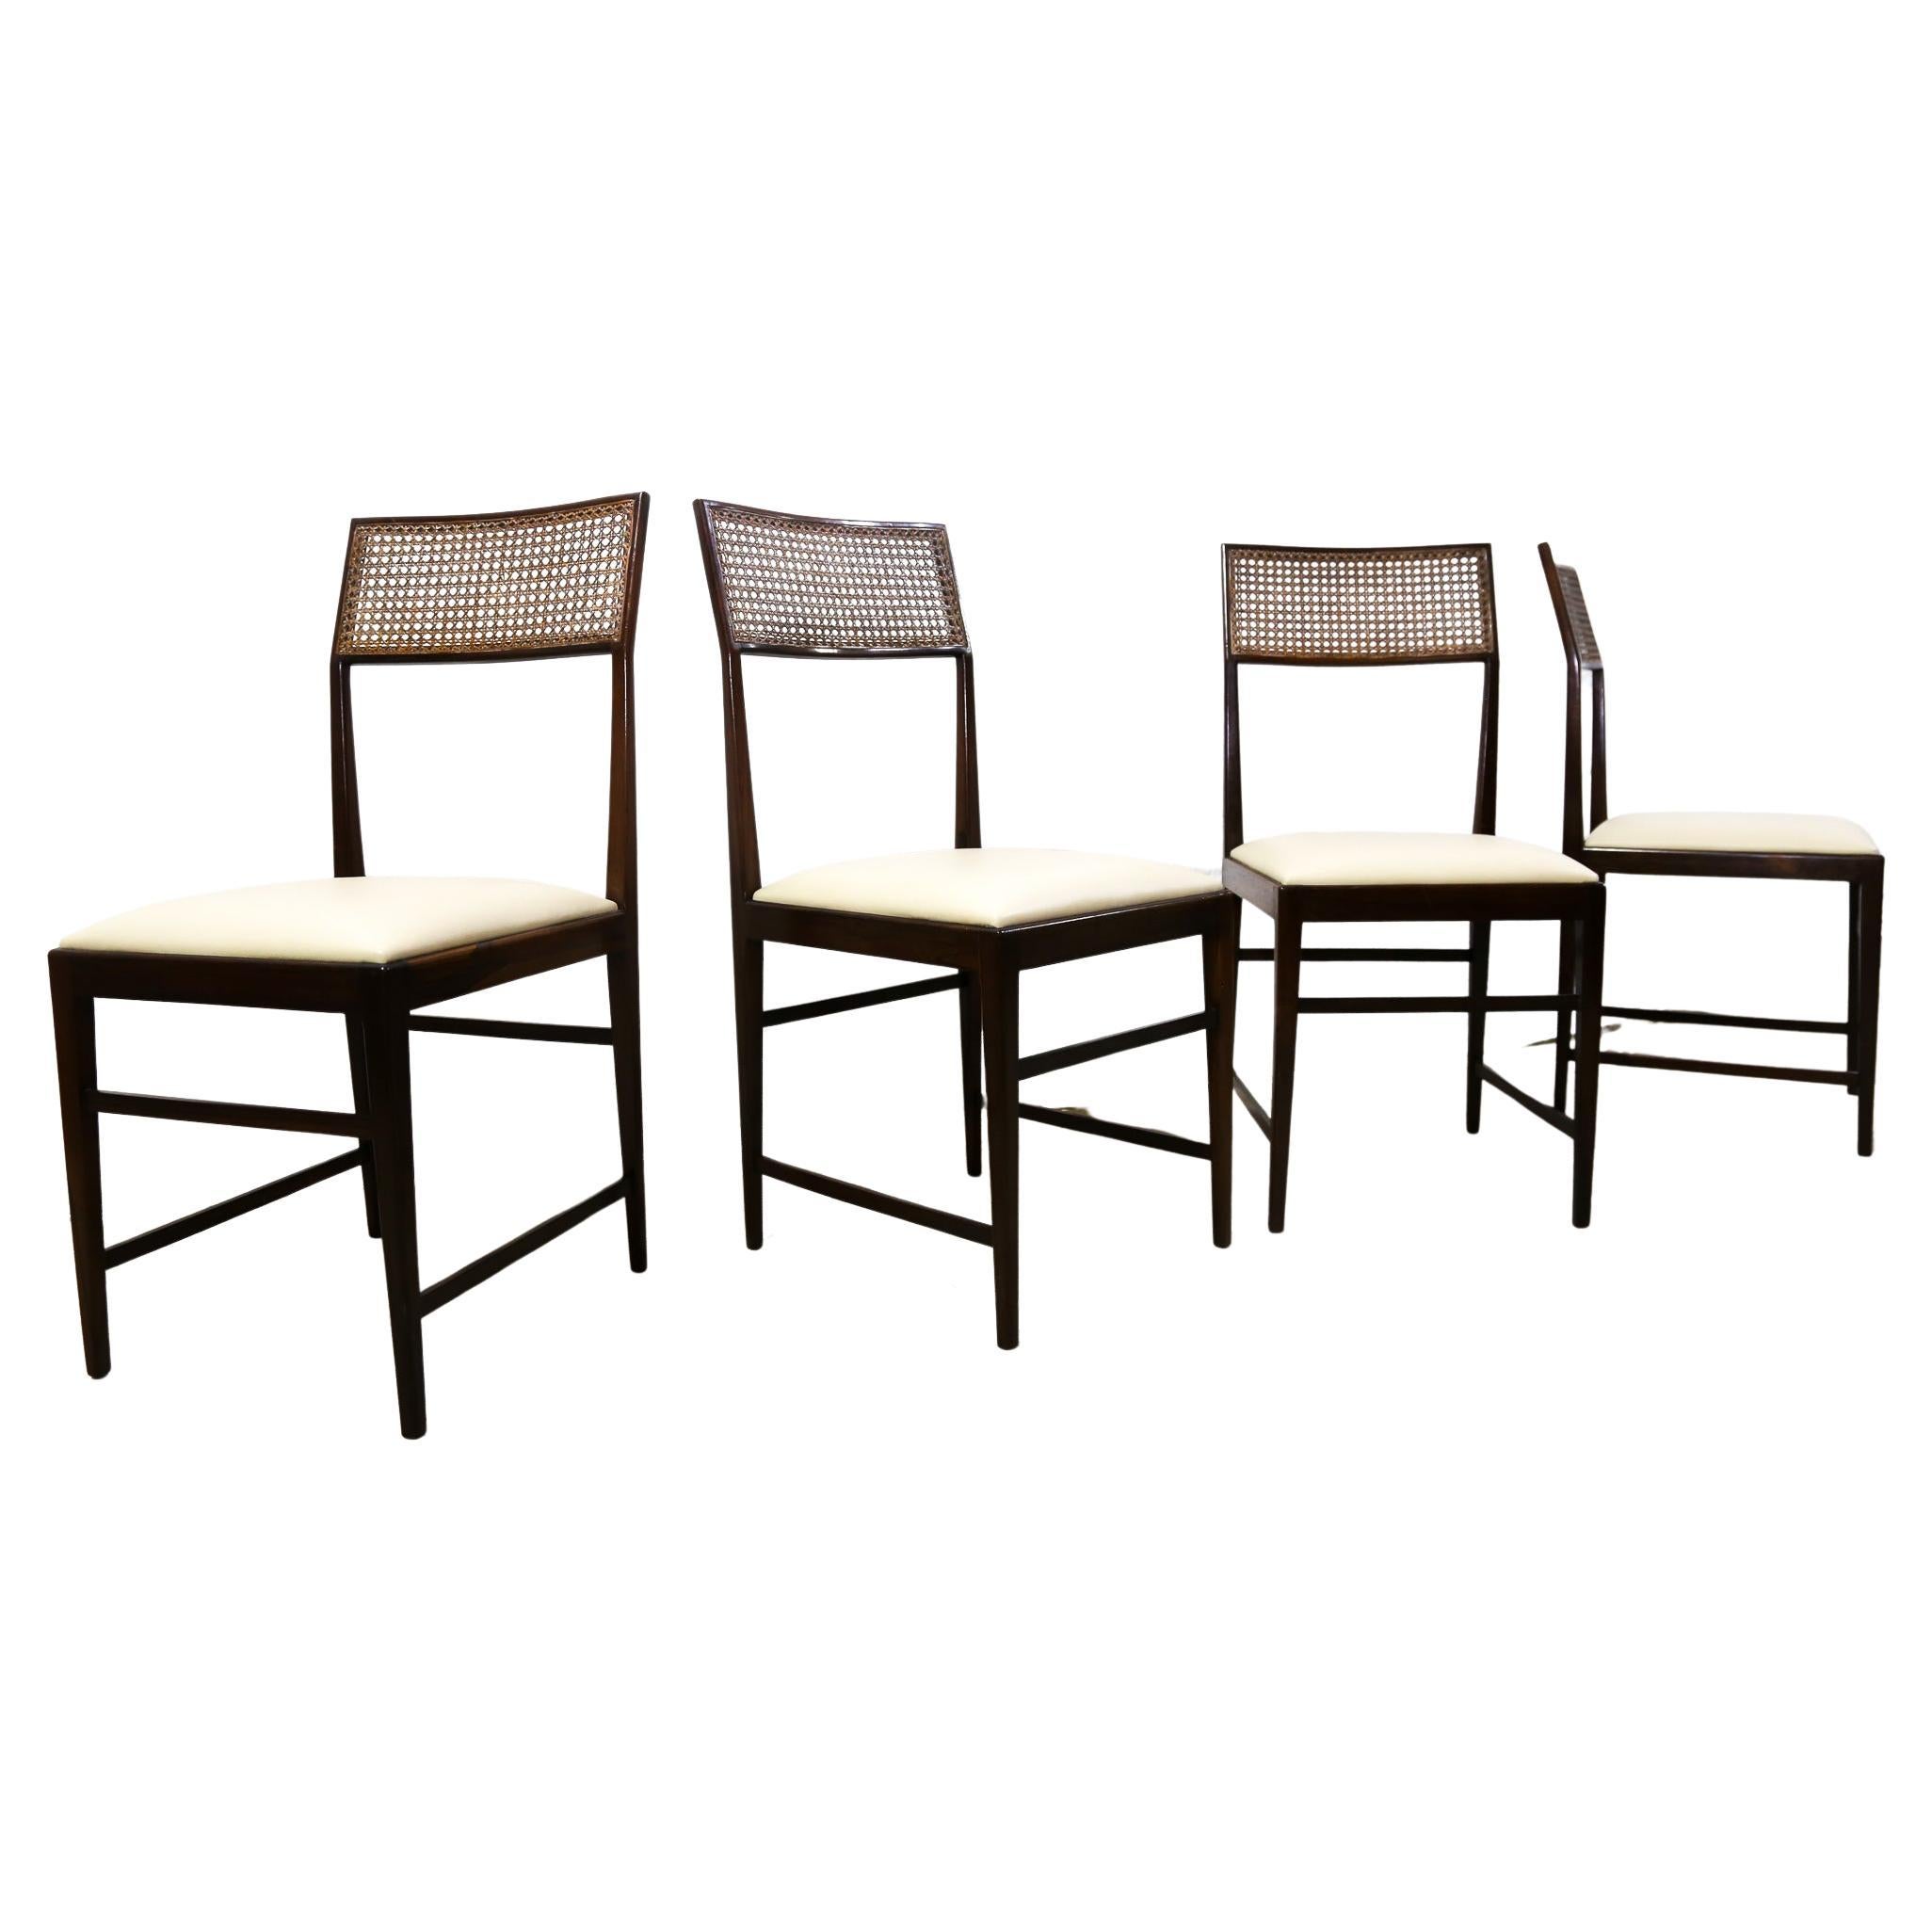 Brazilian Modern 4 Chair Set in Hardwood, Cane, Leather, Joaquim Tenreiro 1950s For Sale